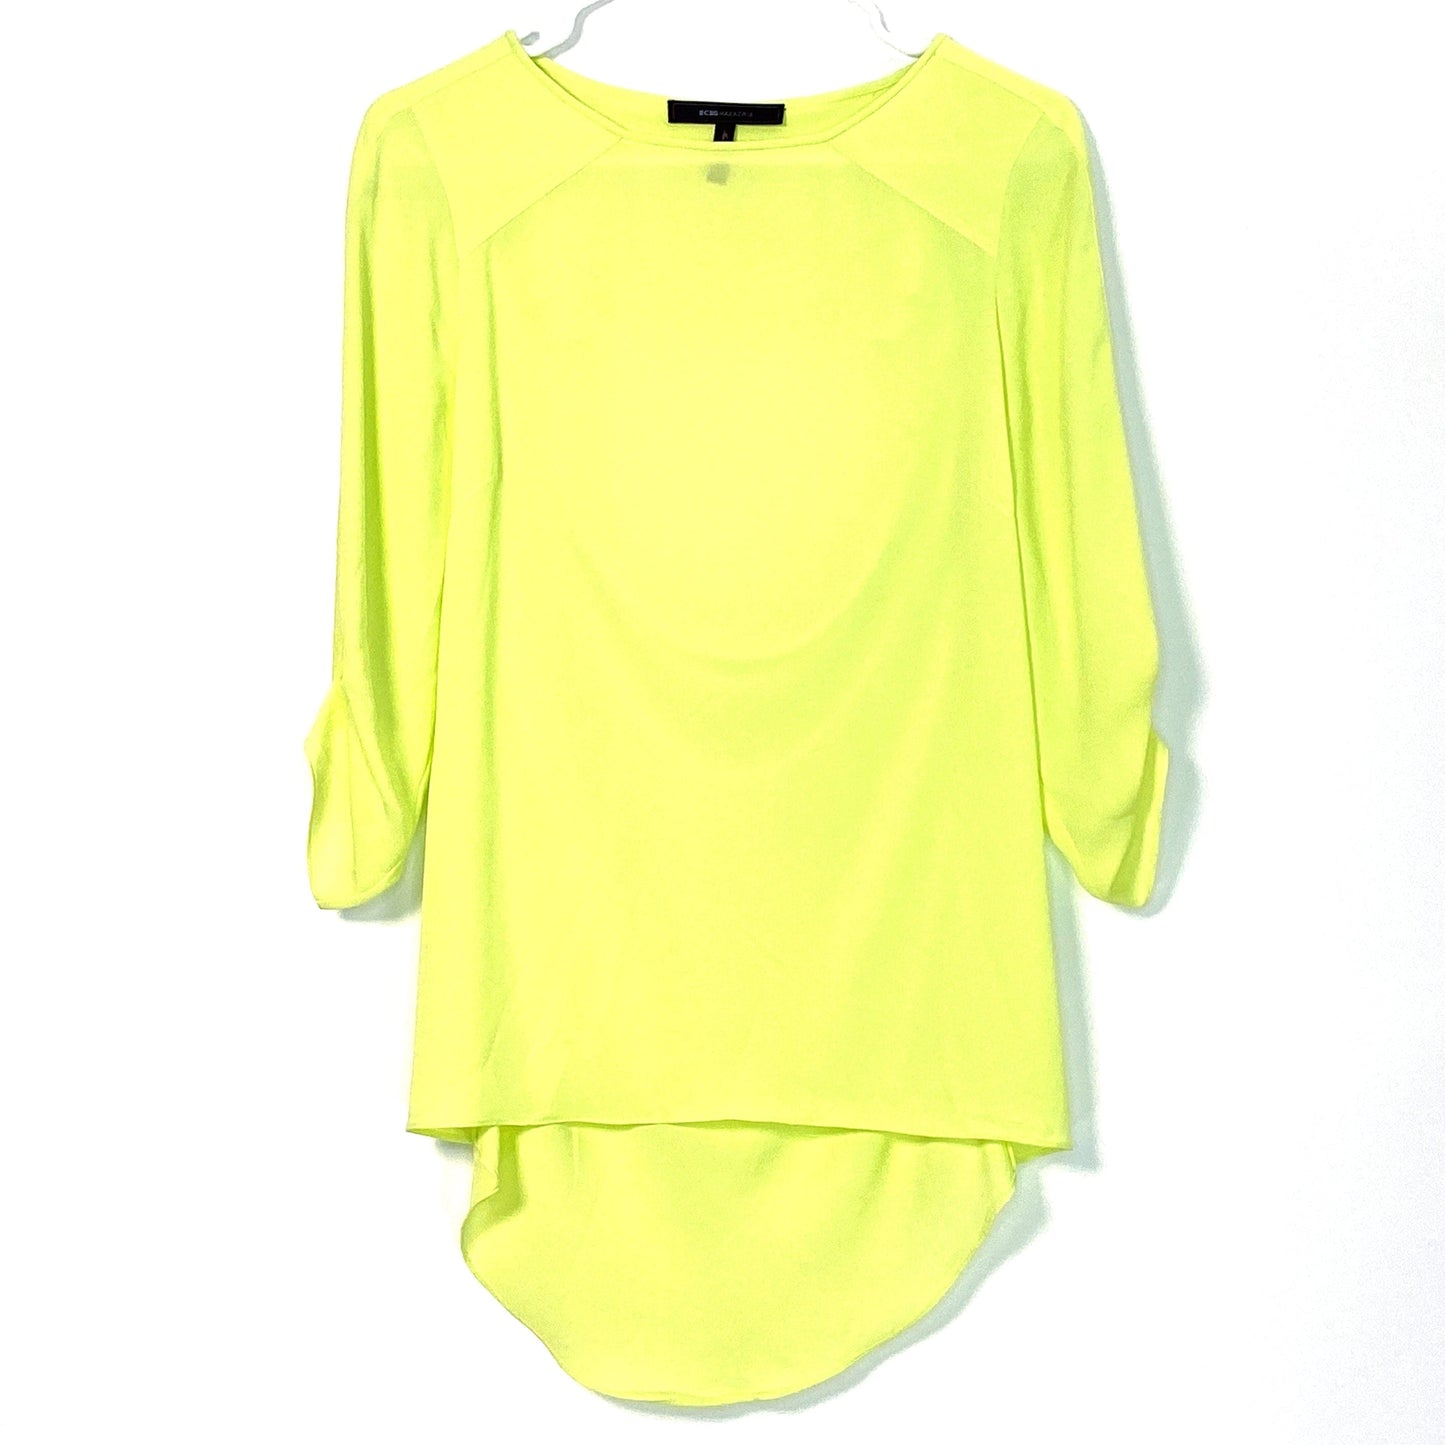 BCBG MAXAZRIA Womens Size XS Yellow Blouse Hi-Lo Top Shirt